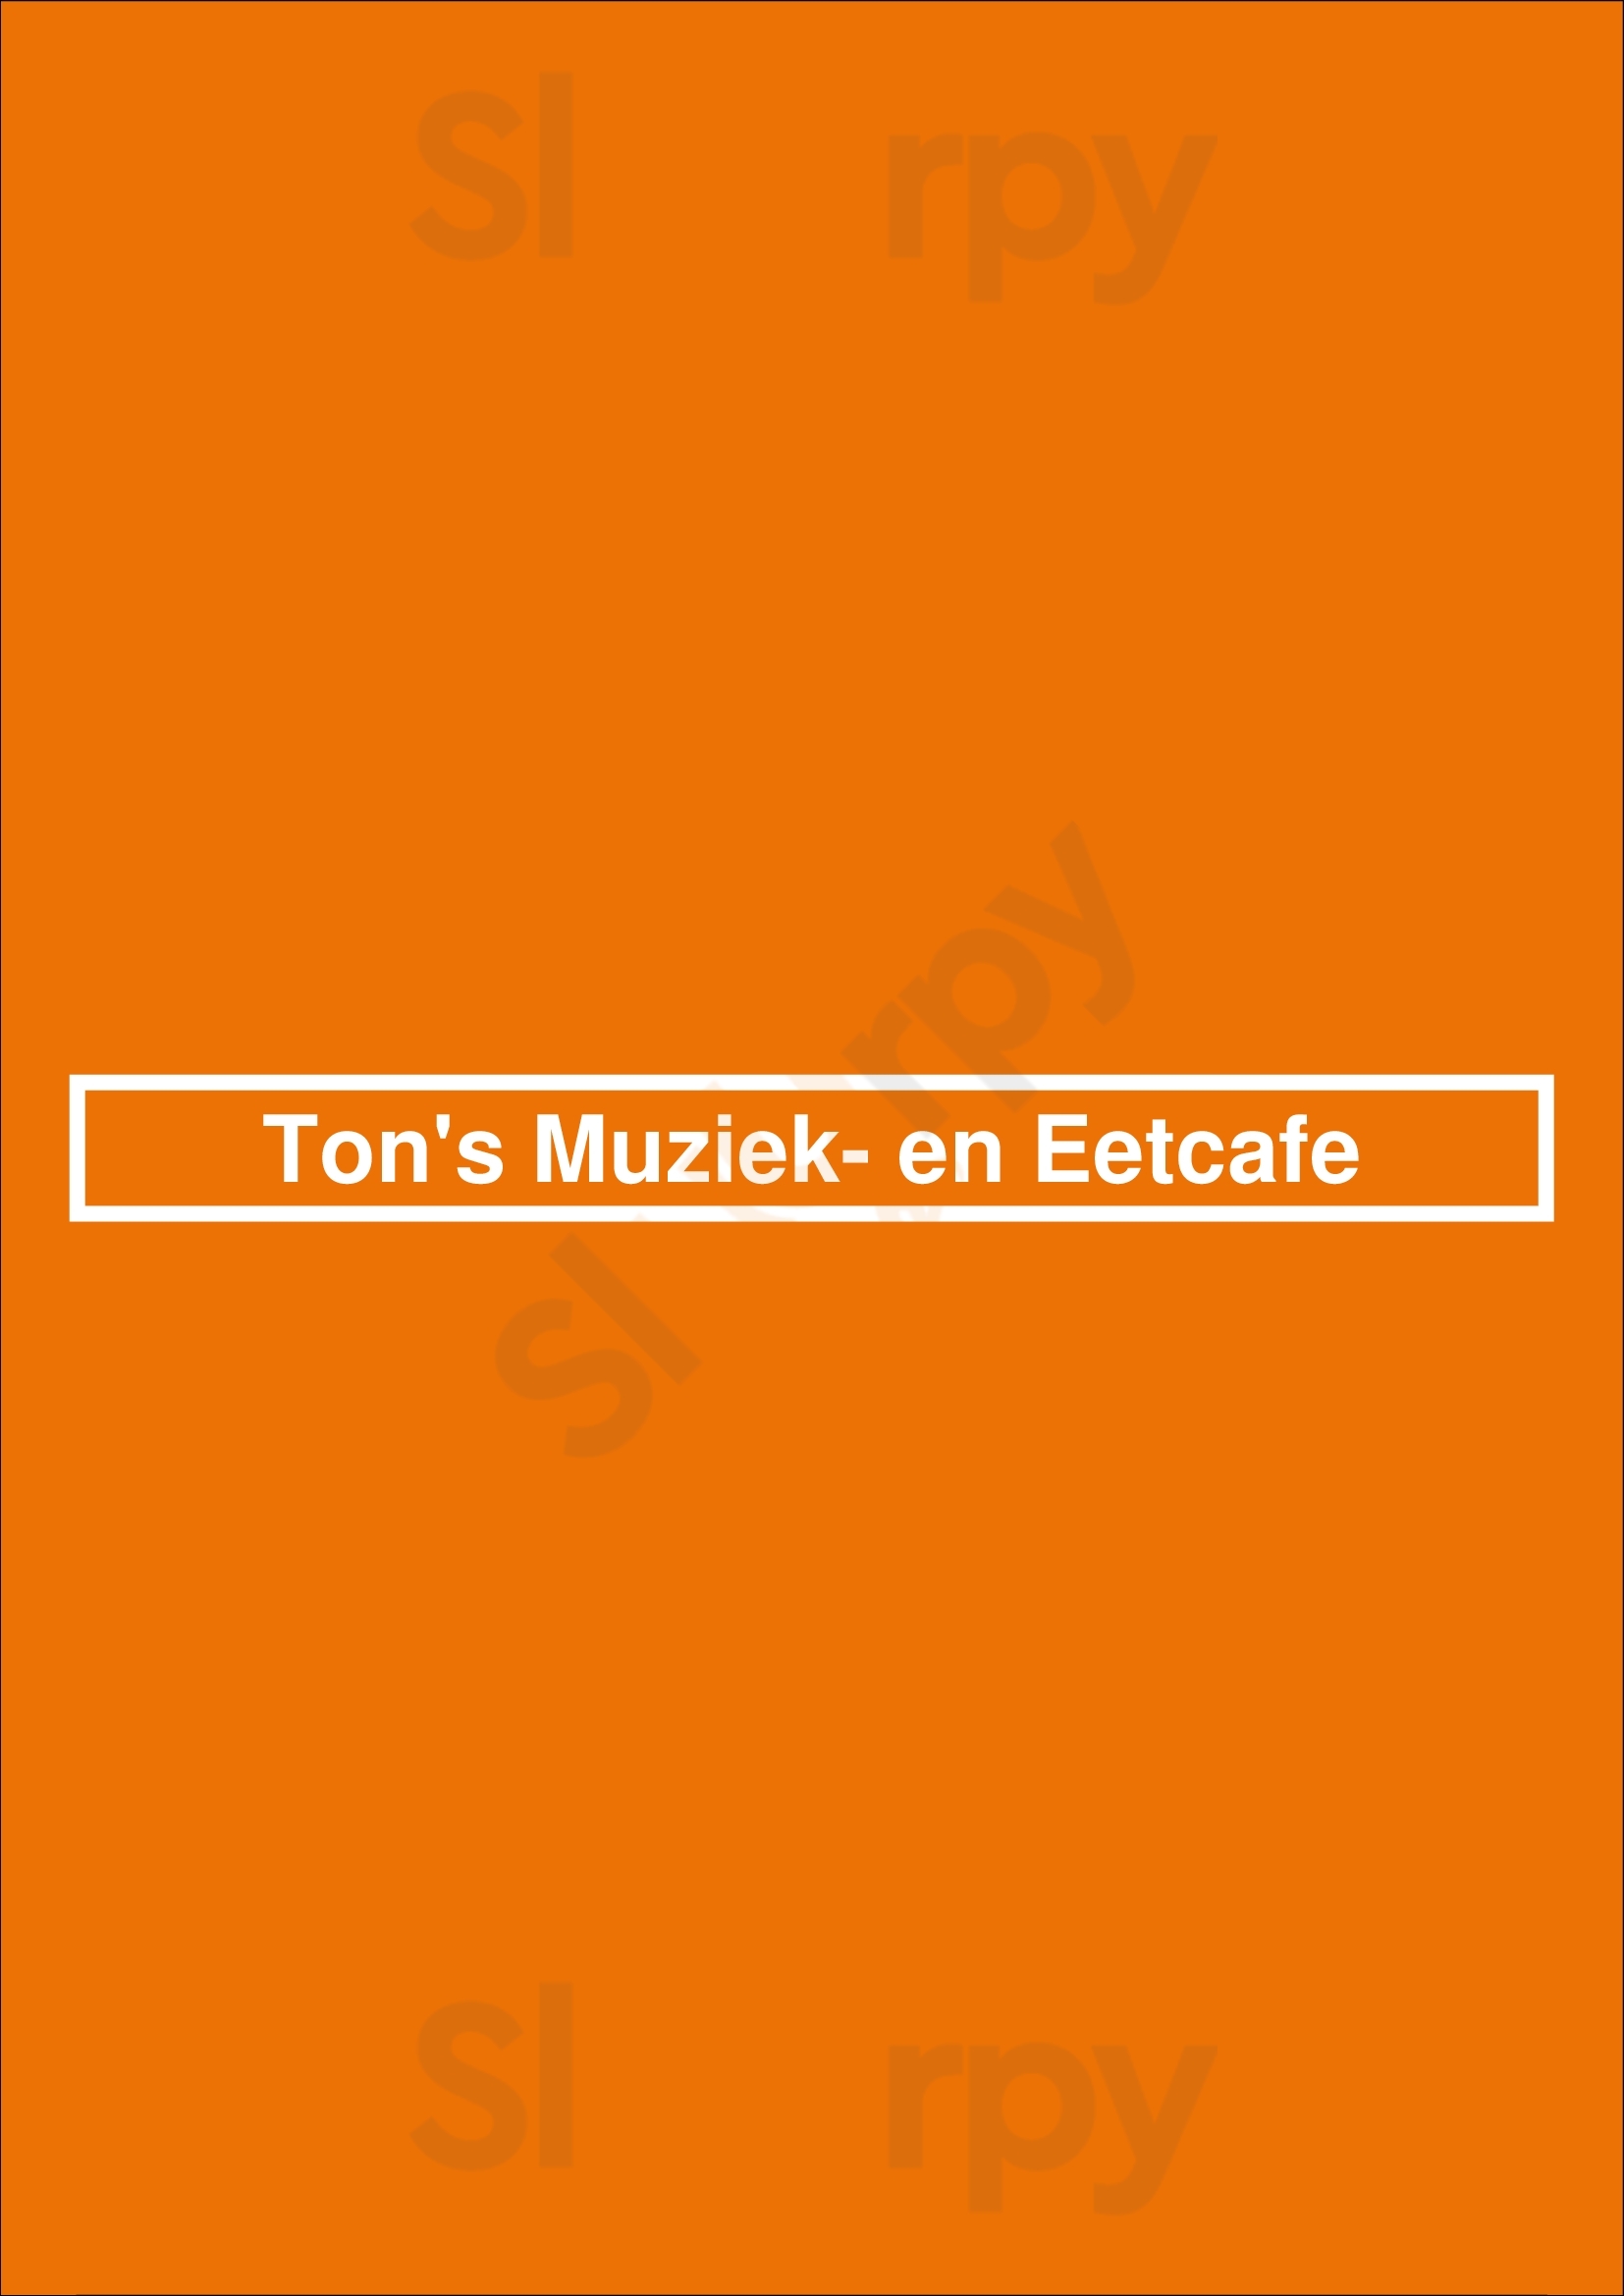 Ton's Muziek- En Eetcafe Rijswijk Menu - 1